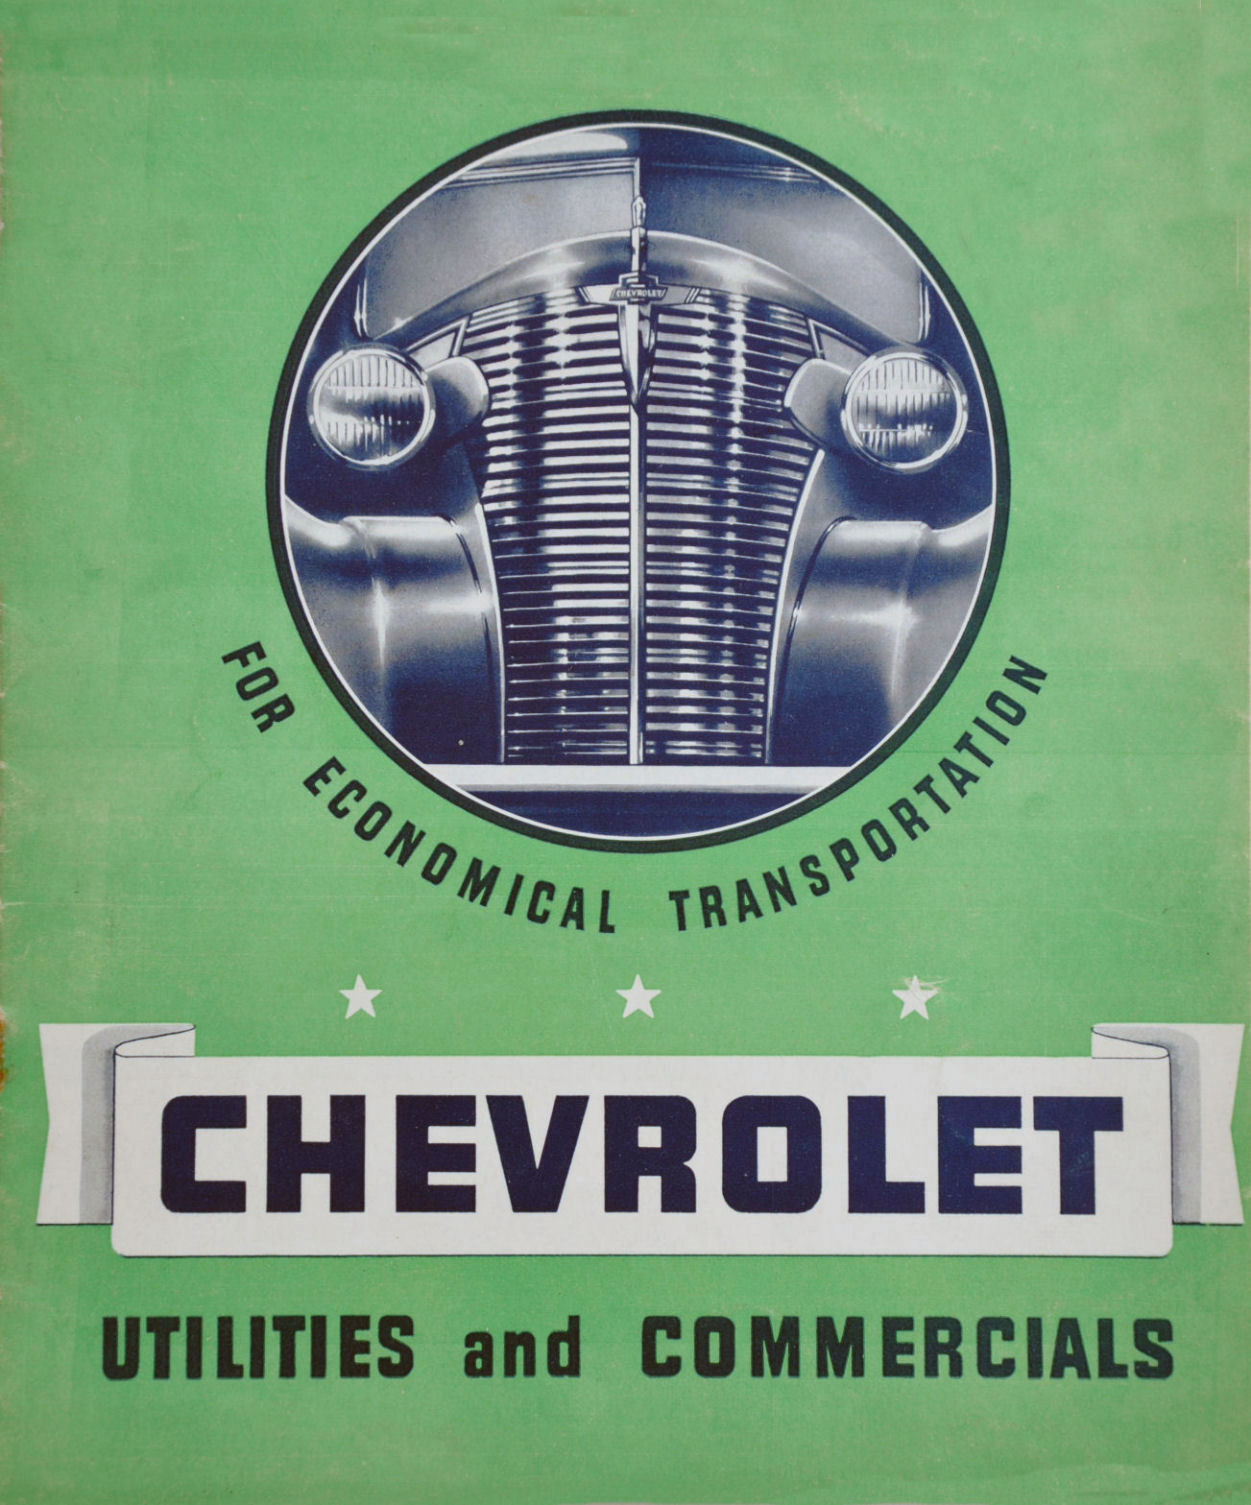 n_1938 Chevrolet Commercial Vehicles-01.jpg